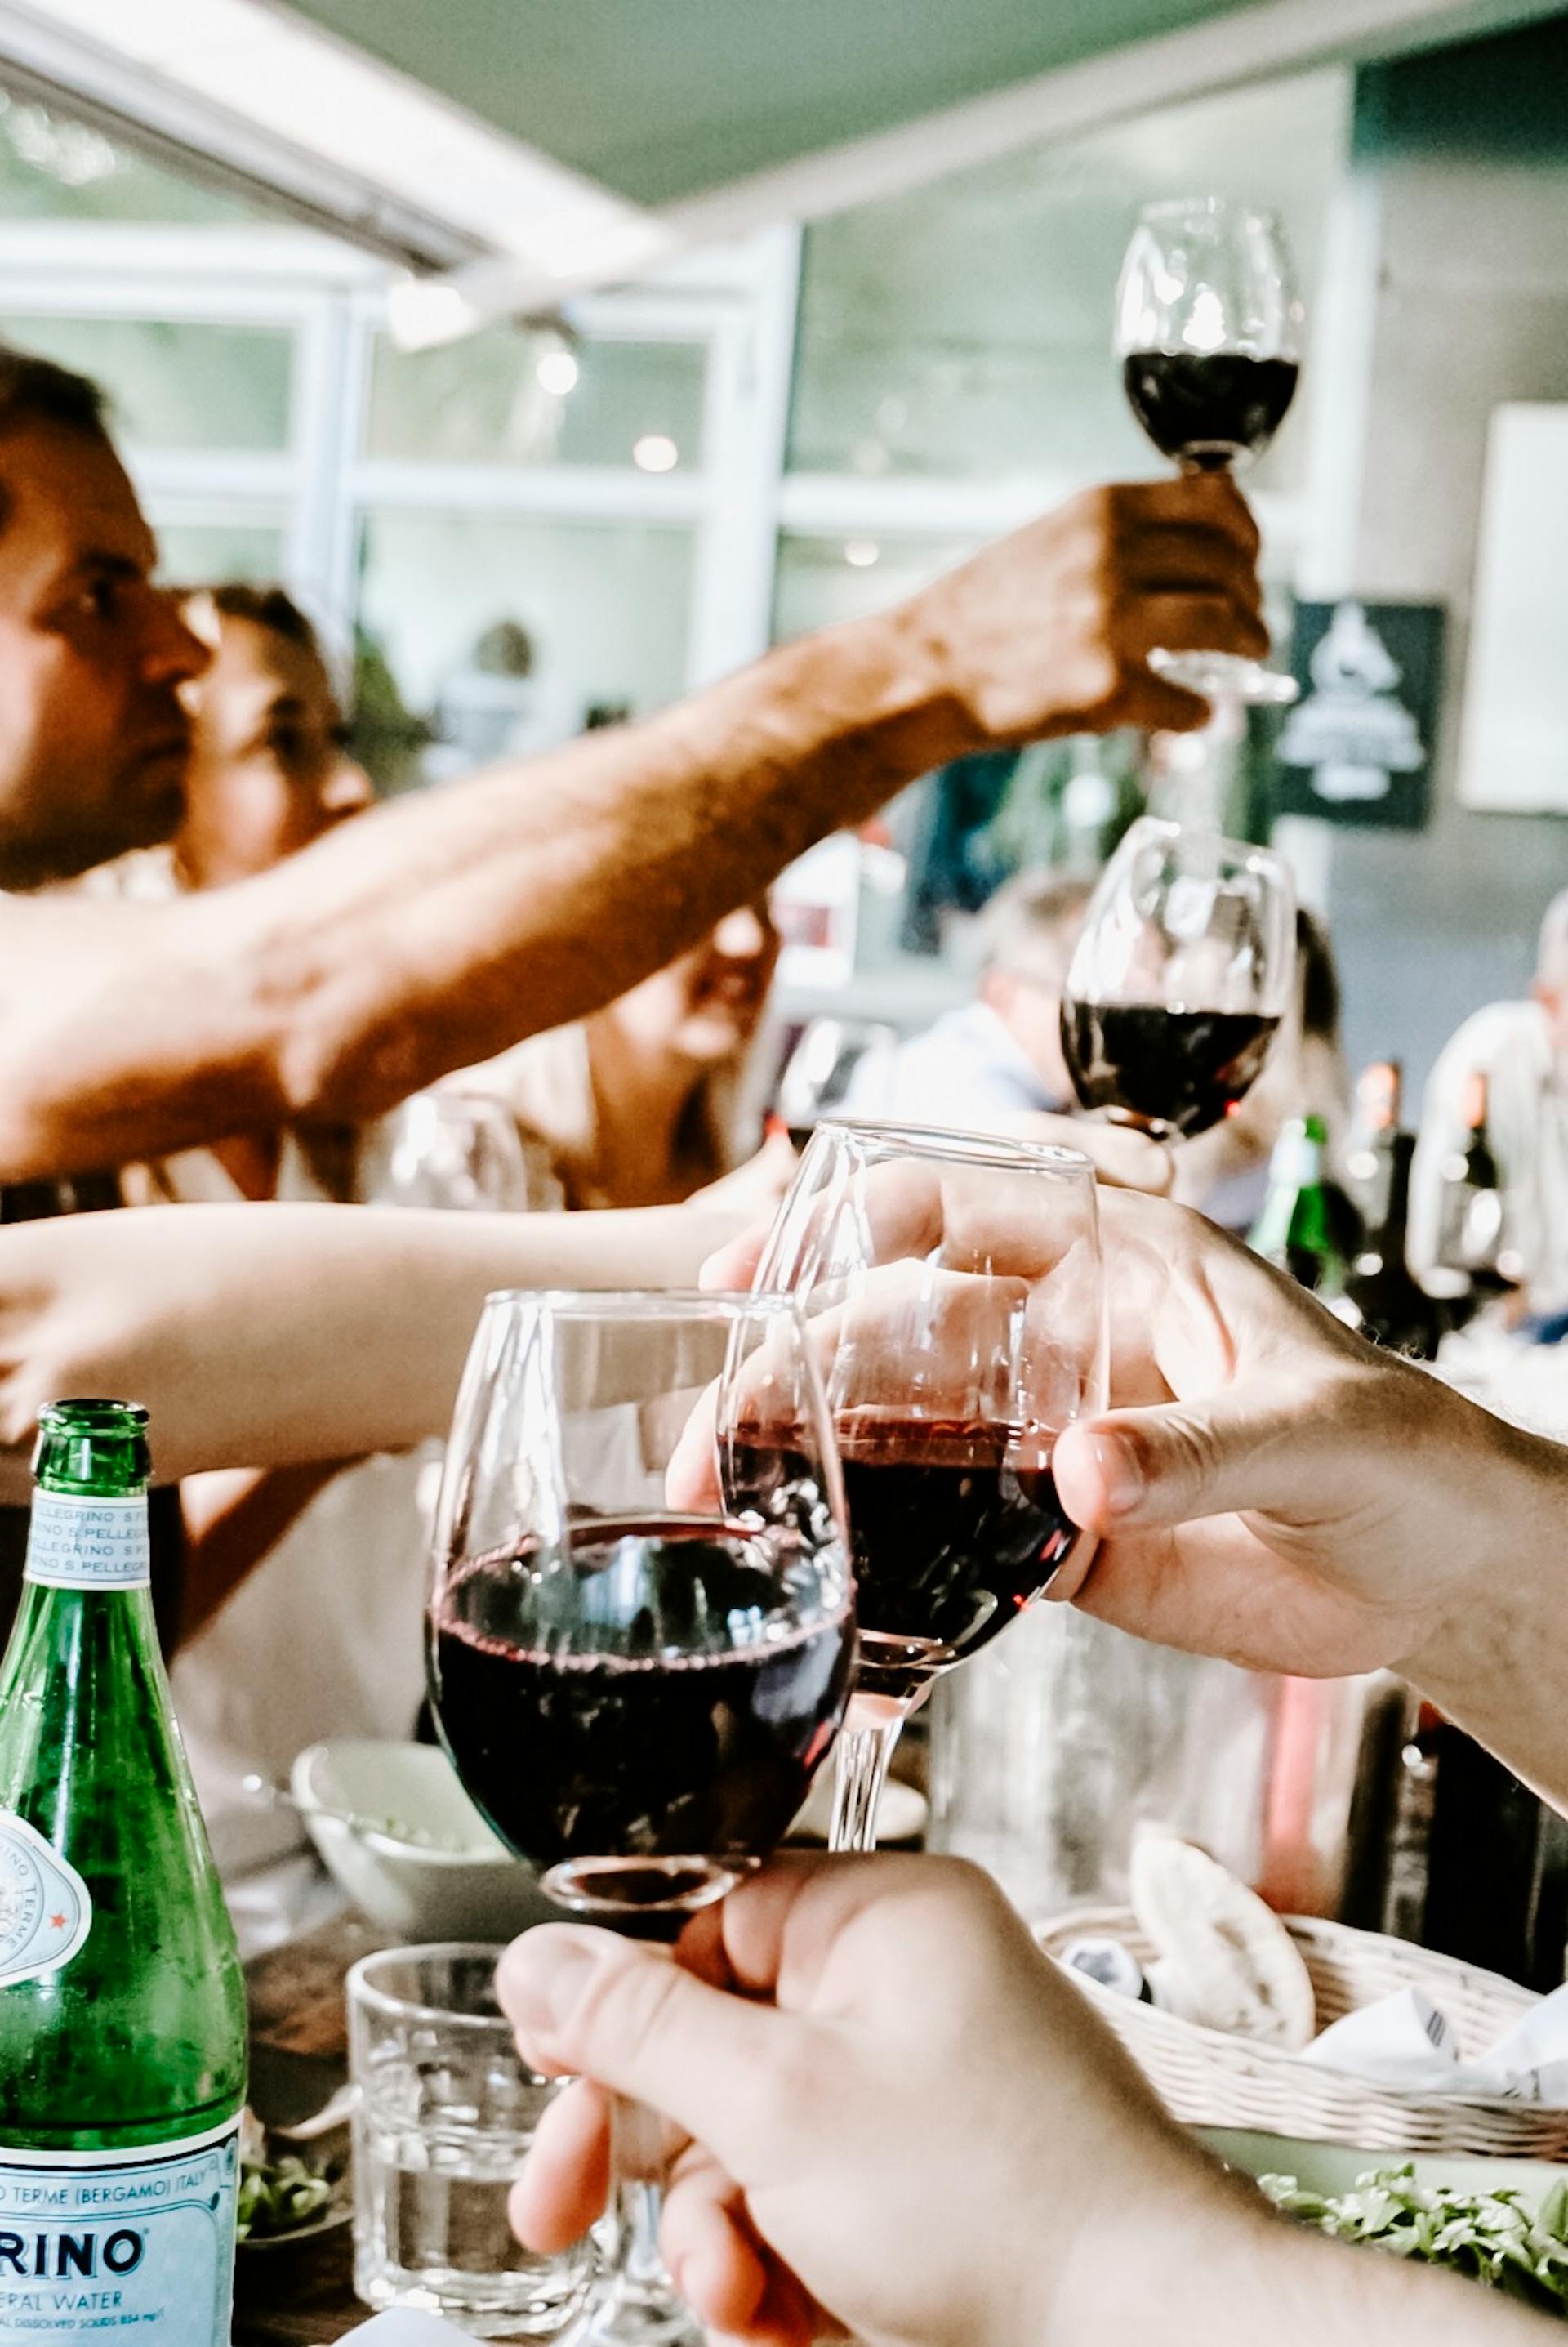 Des gens trinquent avec du vin | Source : Pexels